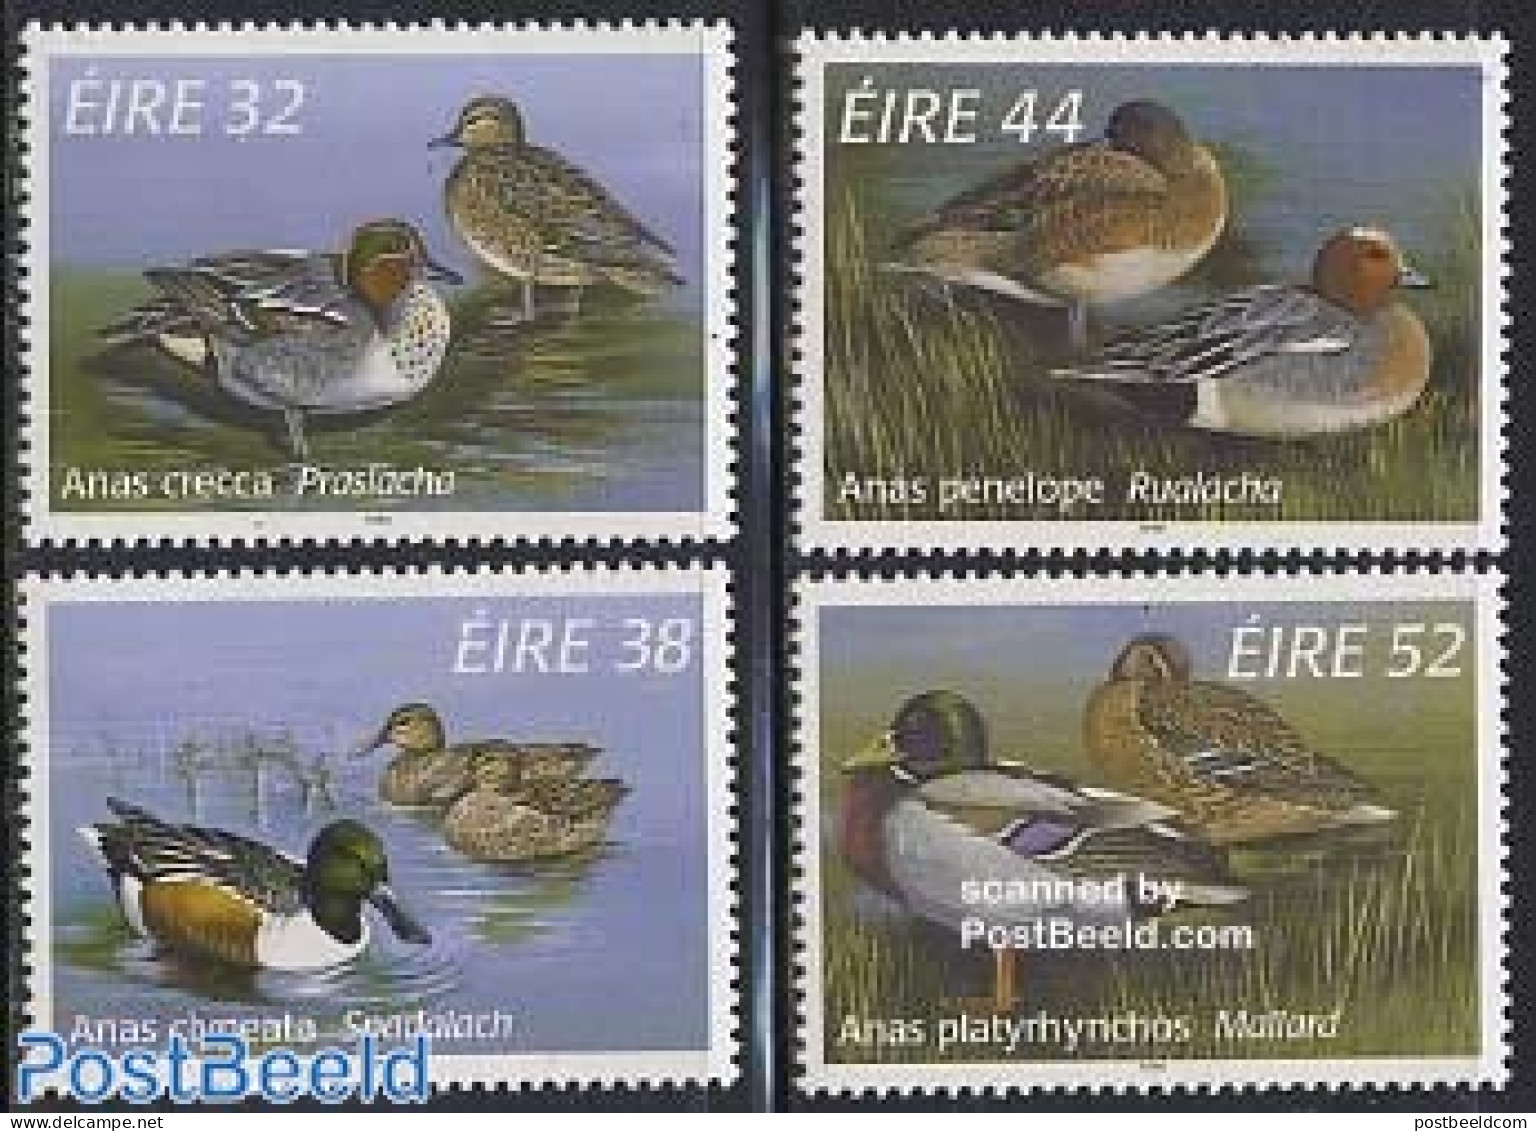 Ireland 1996 Ducks 4v, Mint NH, Nature - Birds - Ducks - Neufs